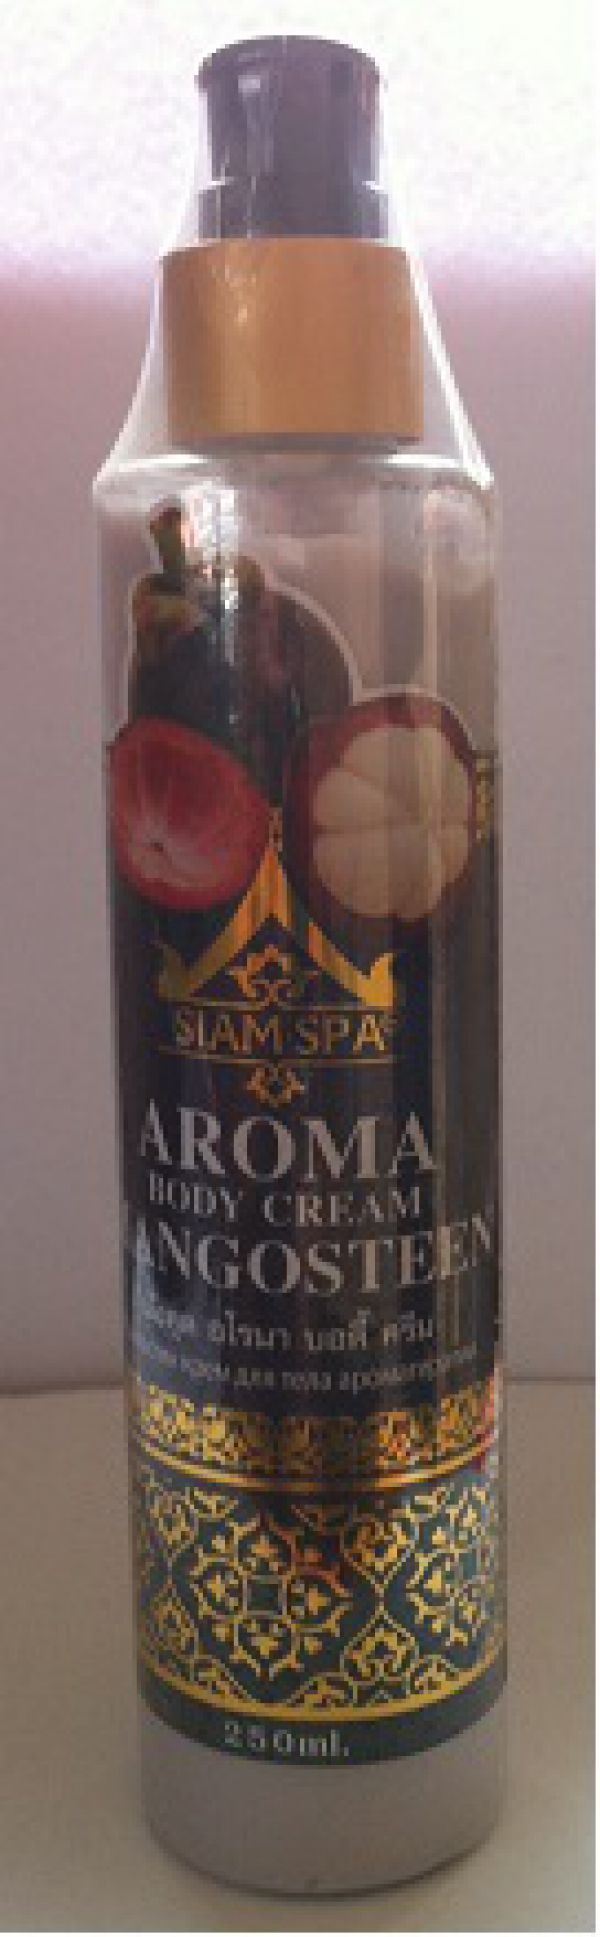 Siam SPA Aroma Body Cream Mangosteen 250г